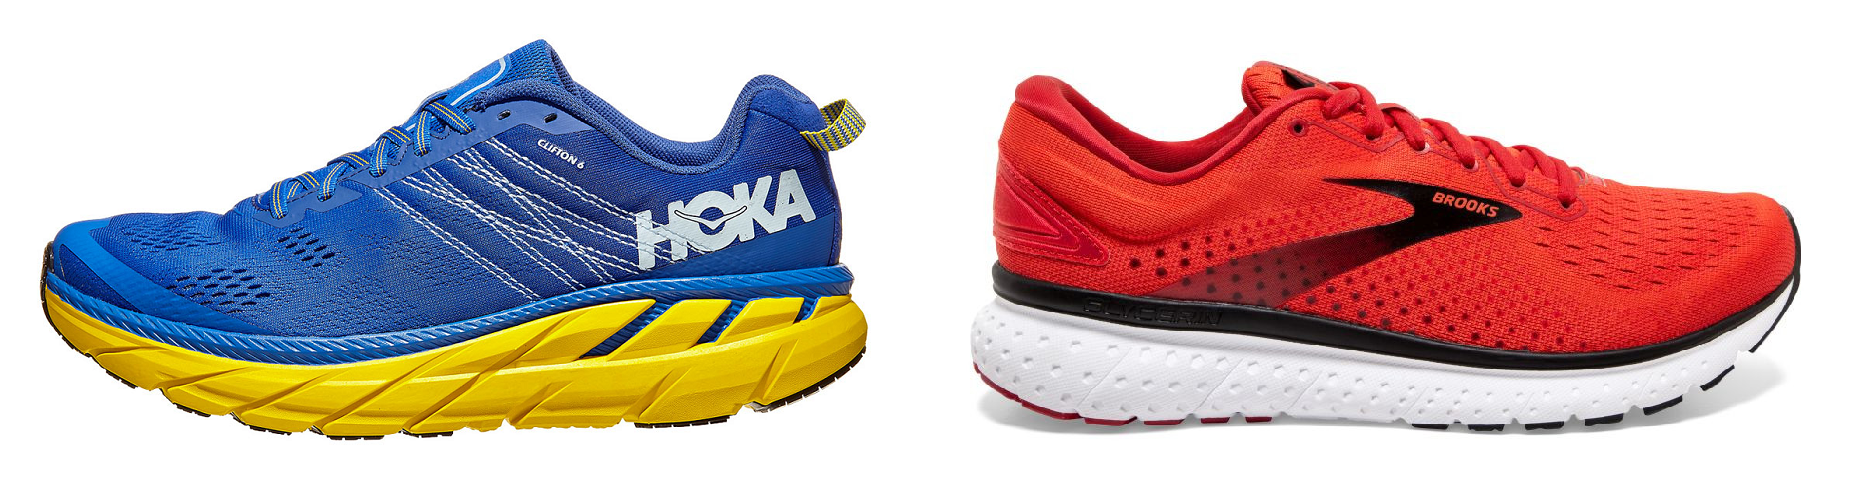 hoka shoes vs brooks